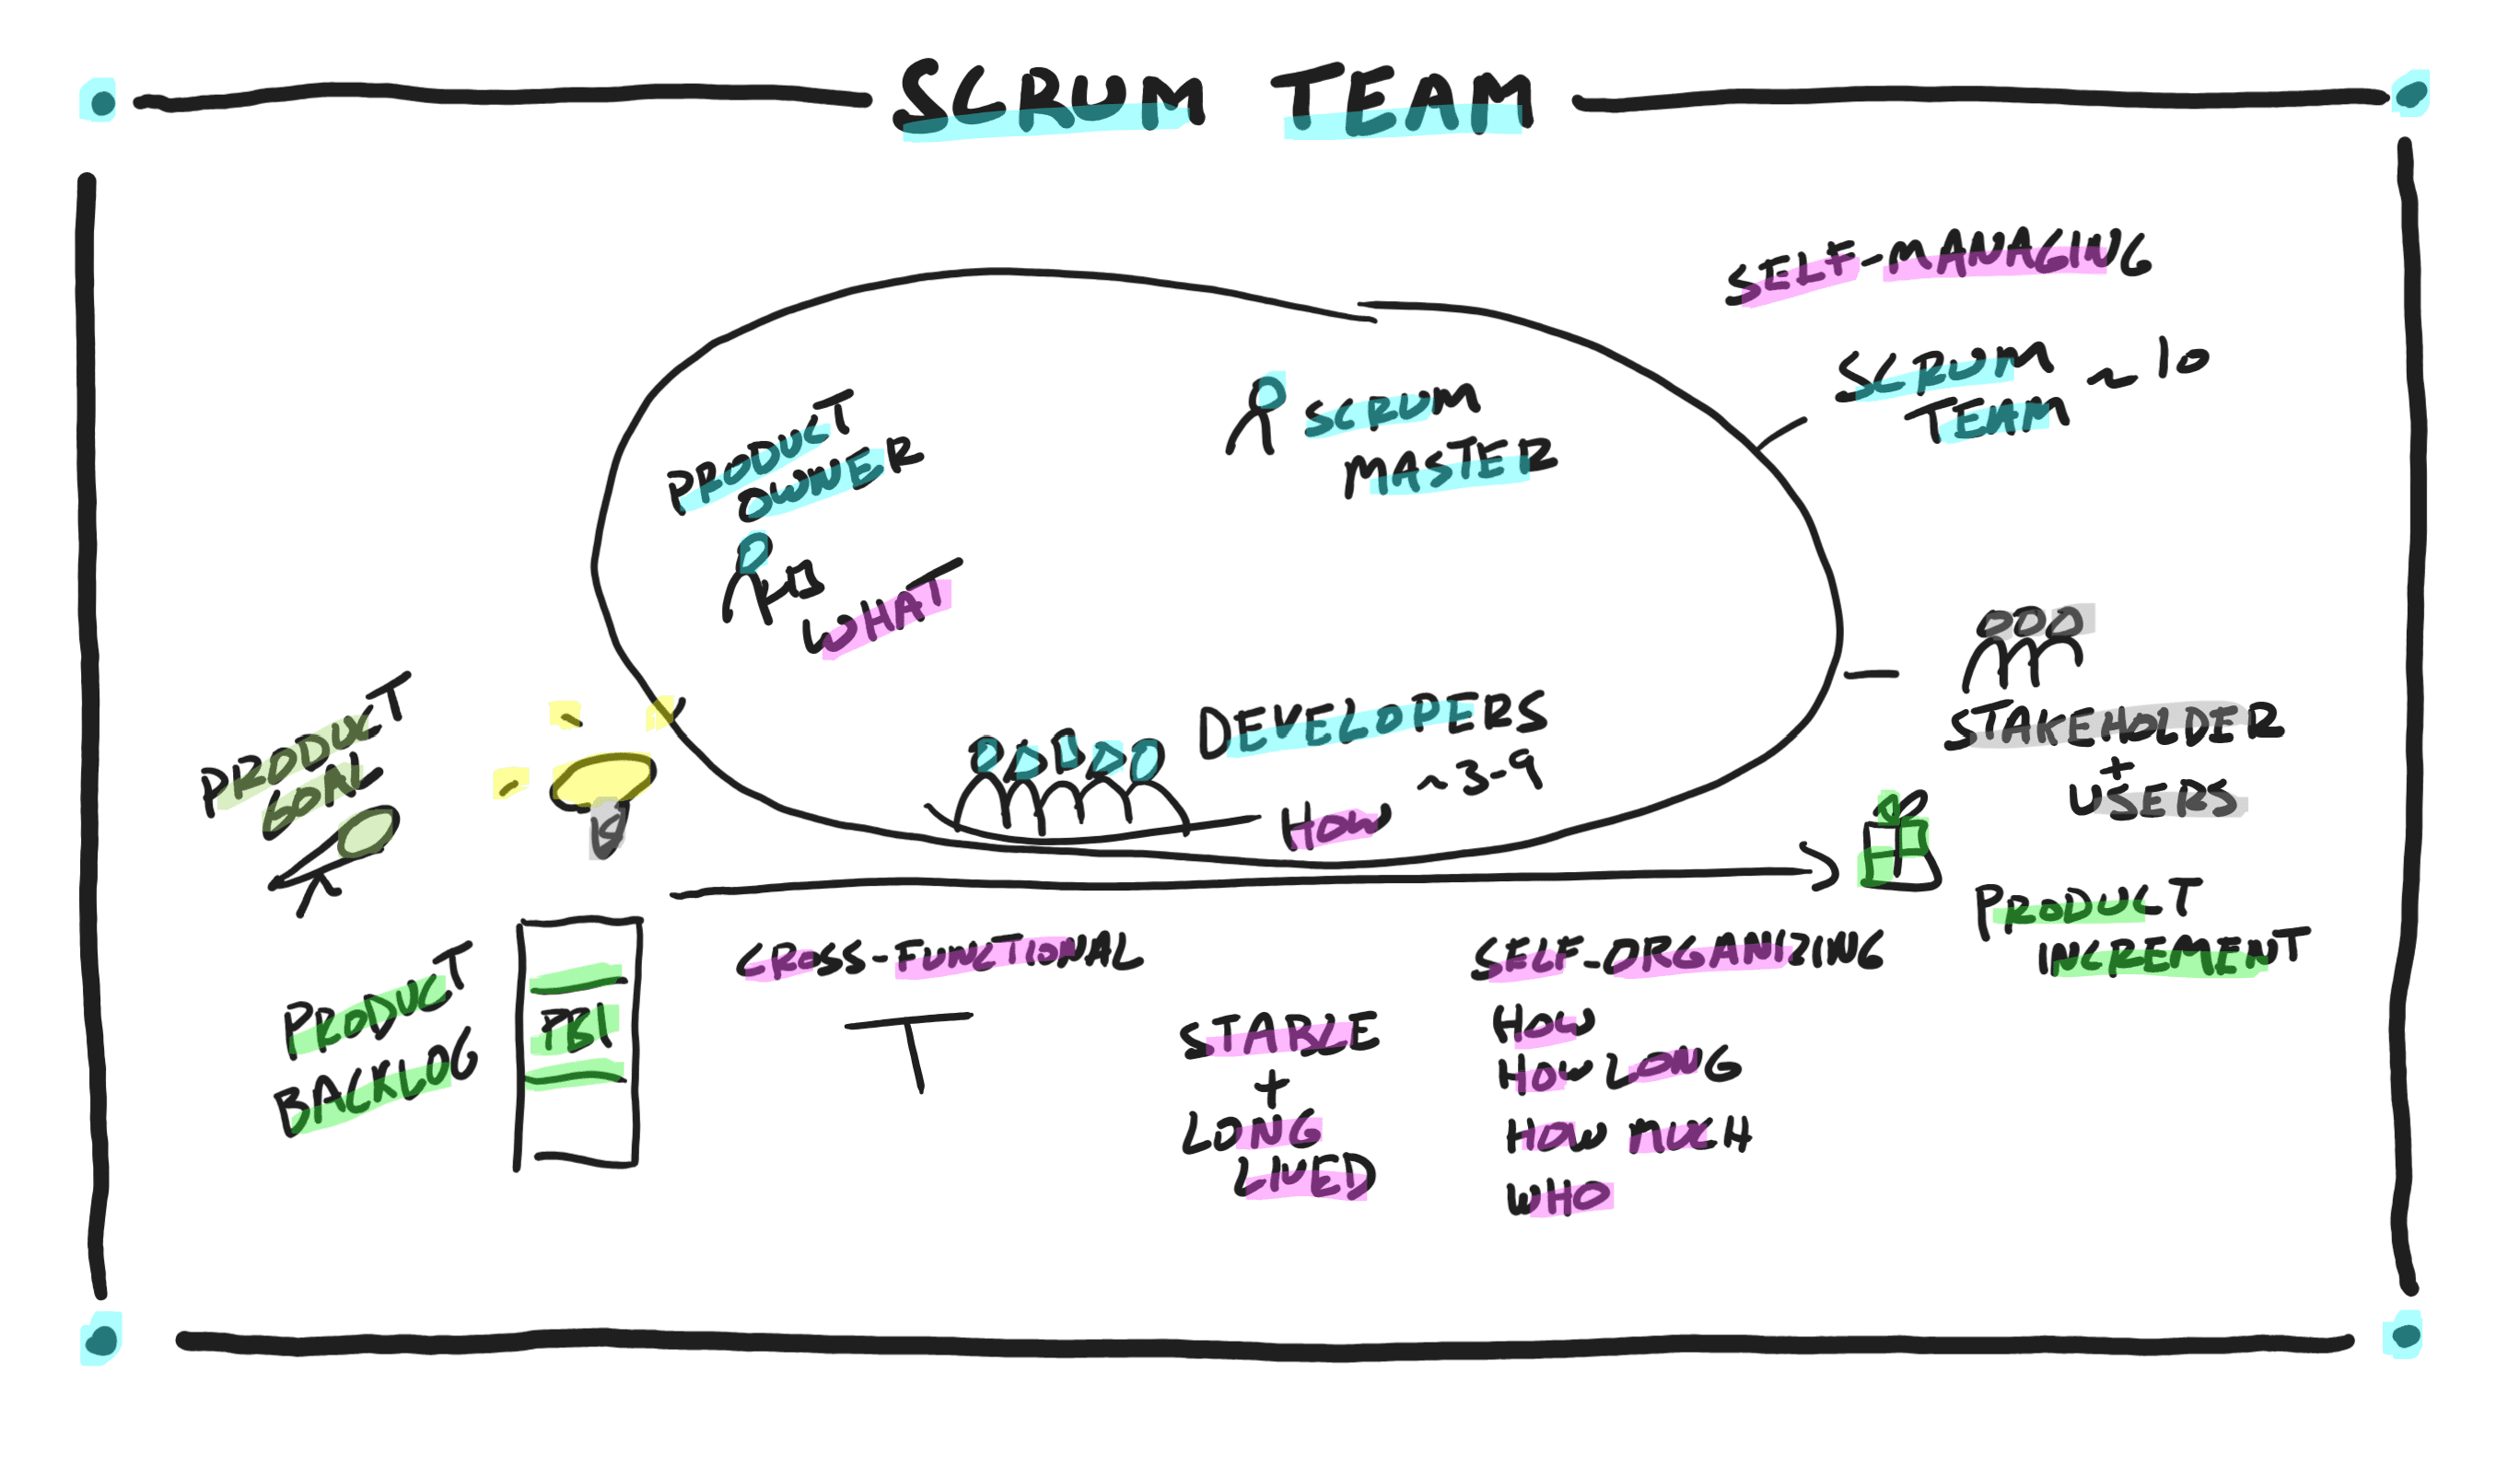 Scrum Team in a Nutshell